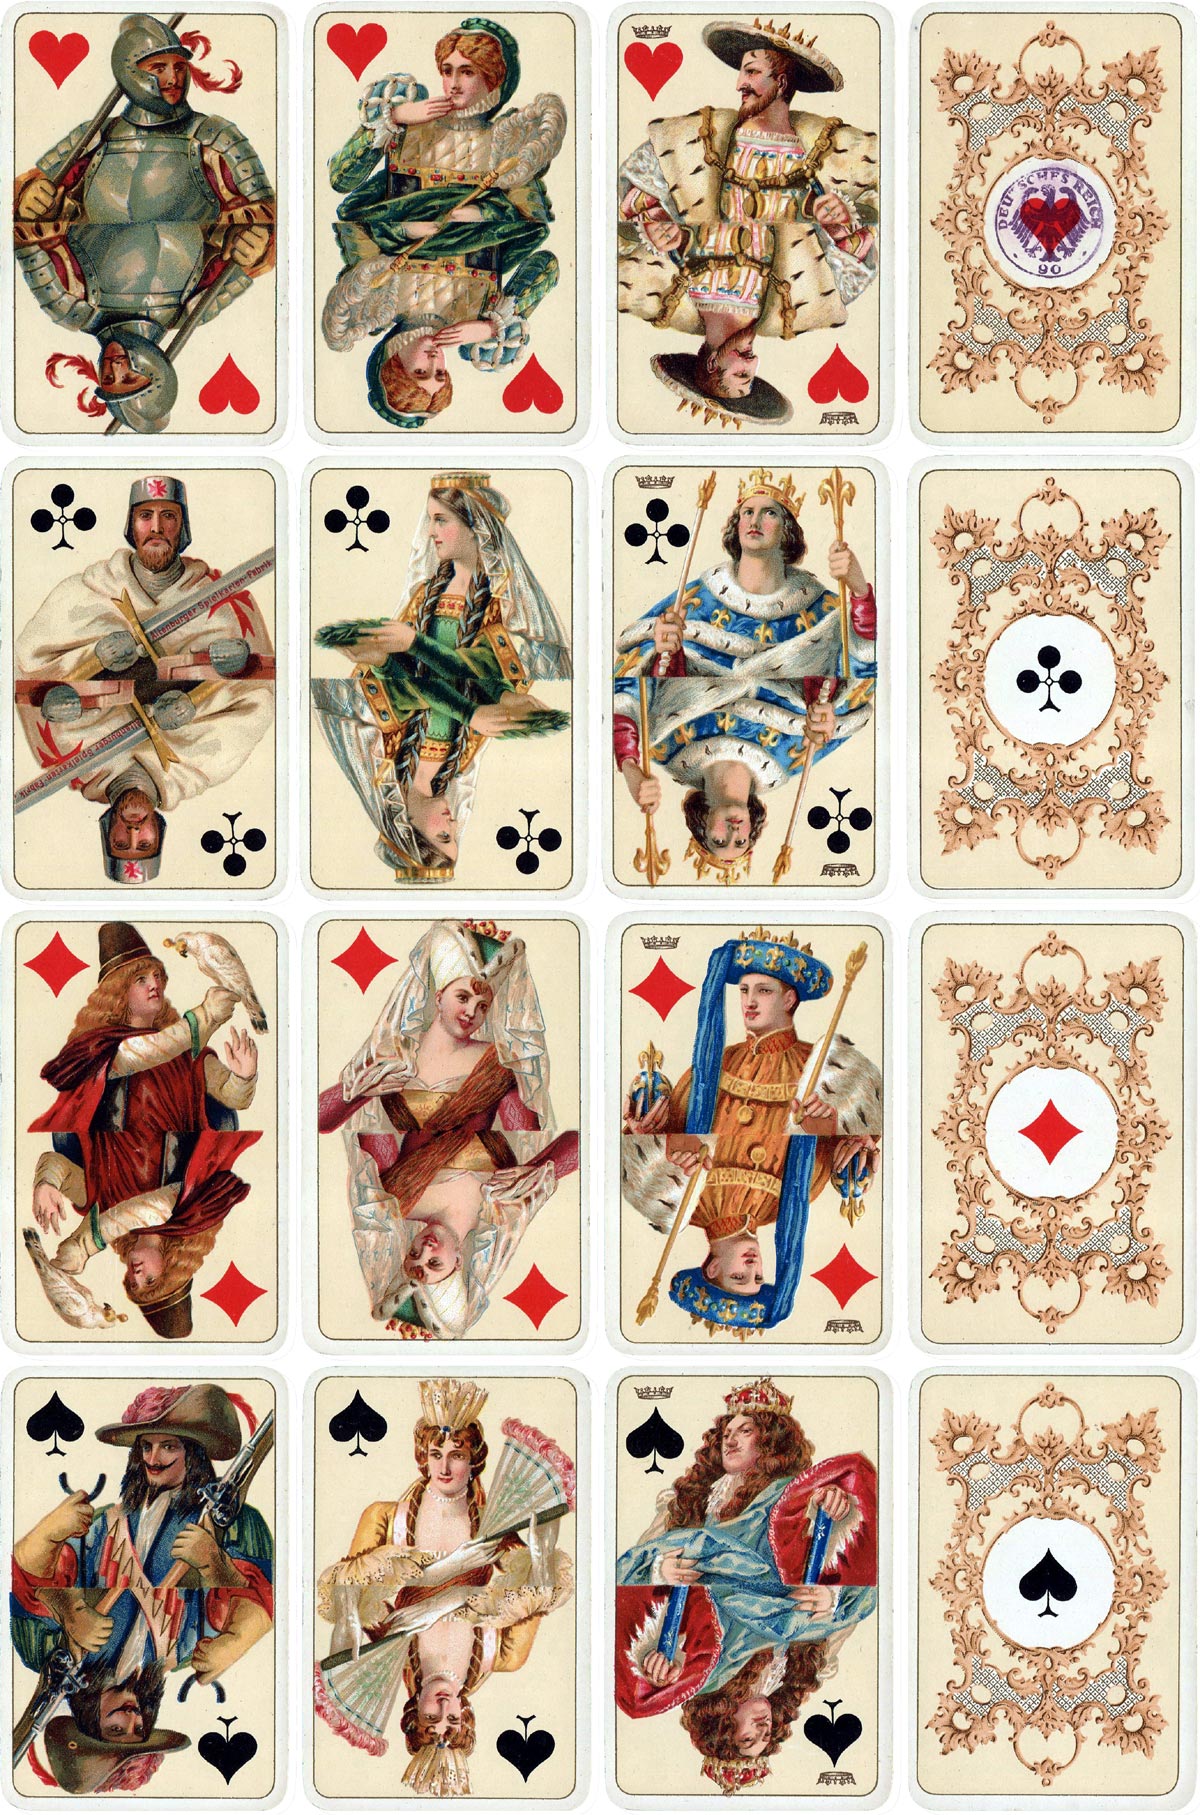 Original “Kaiserkarte” by Schneider & Co, 1895-1897